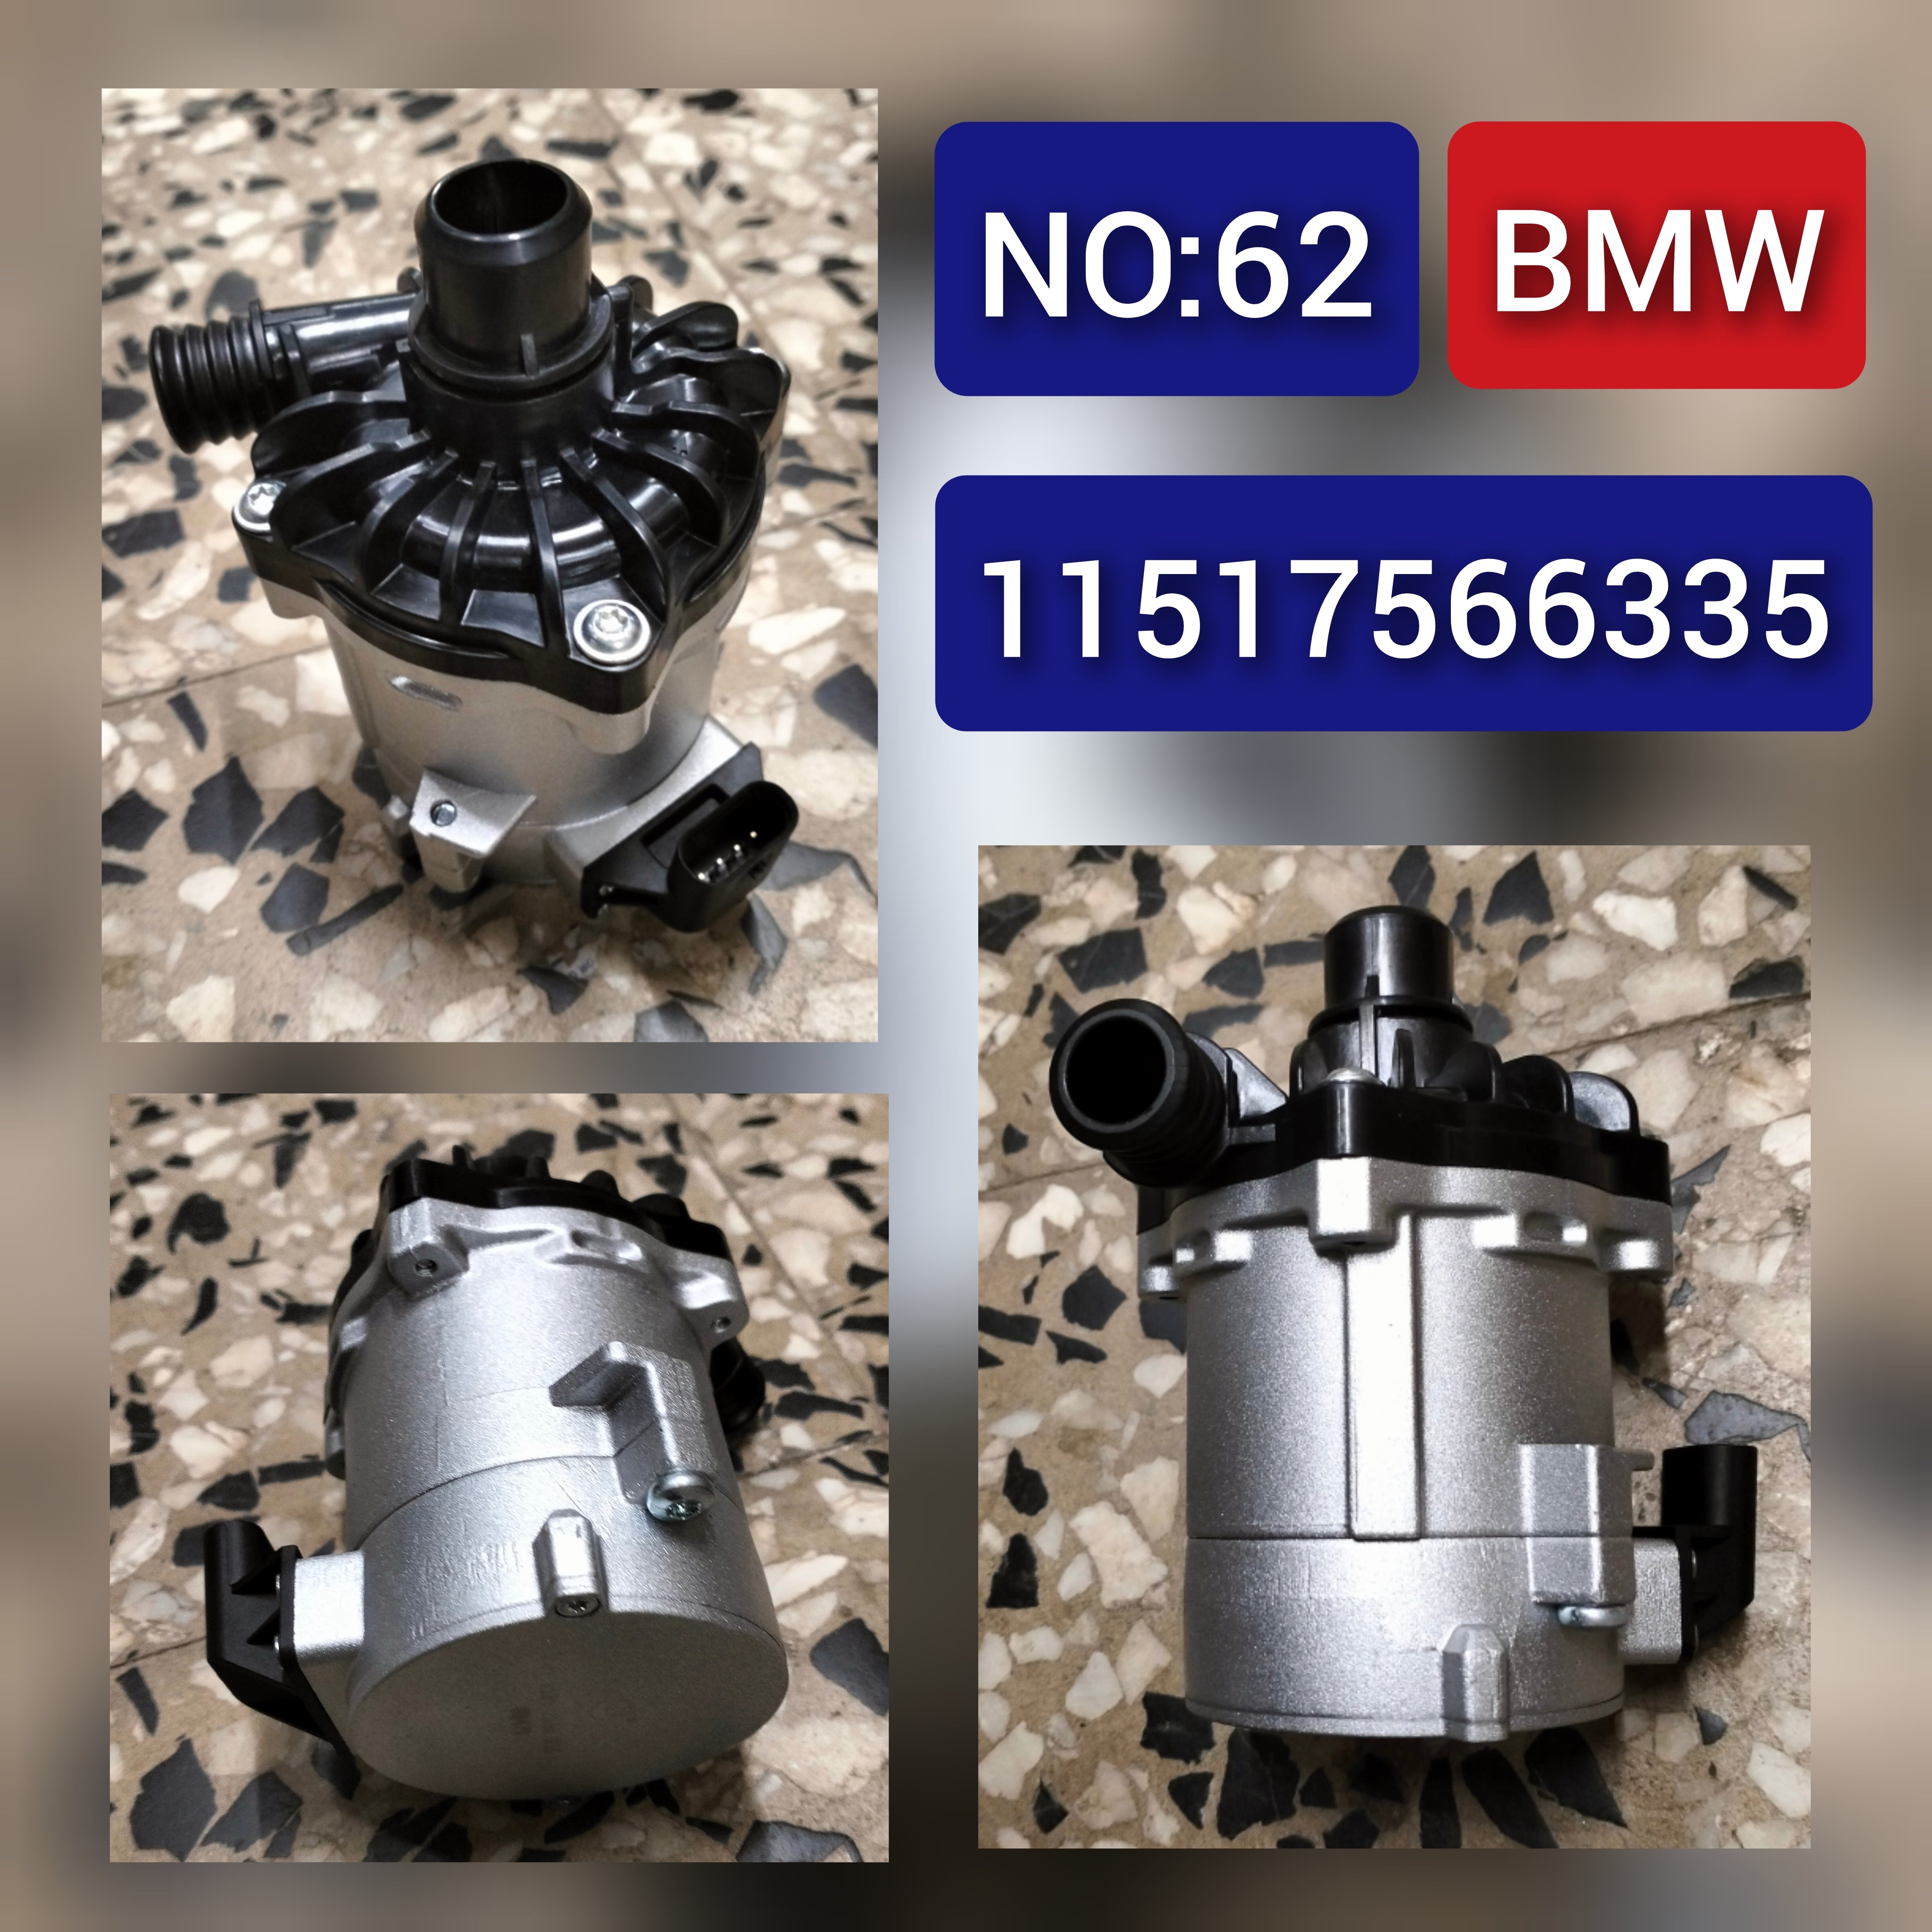 Water Pump 11517566335 For BMW 7 Series F01 F02 & X5 E70 Tag-W-62